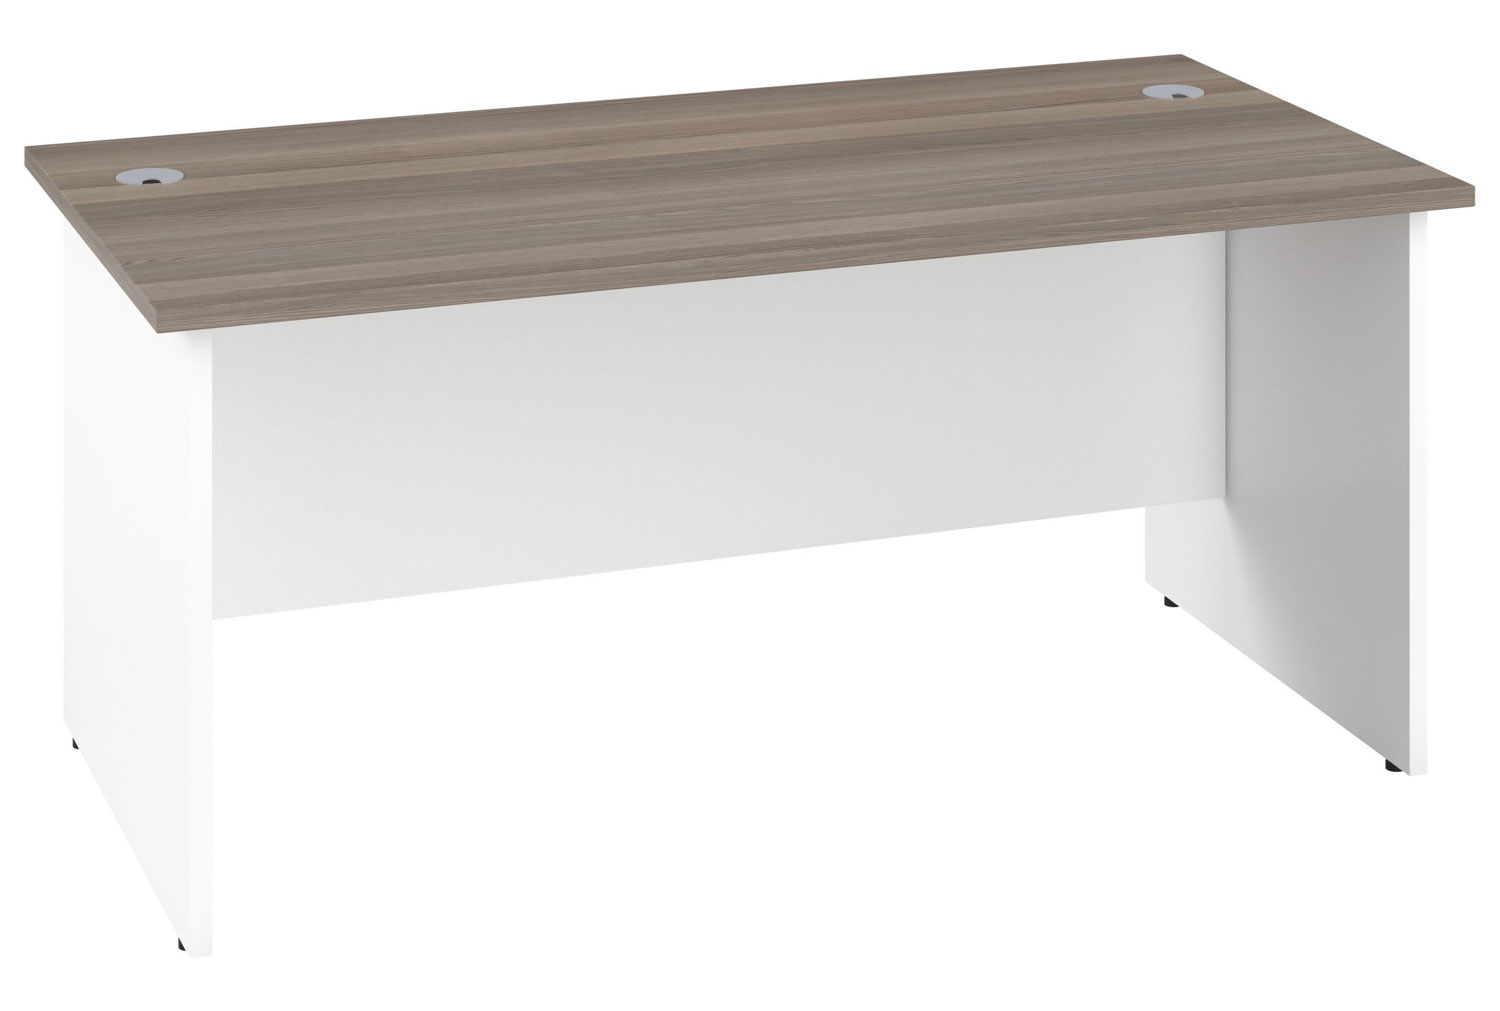 Progress Duo Panel End Rectangular Office Desk, 160wx80dx73h (cm), Grey Oak, Express Delivery